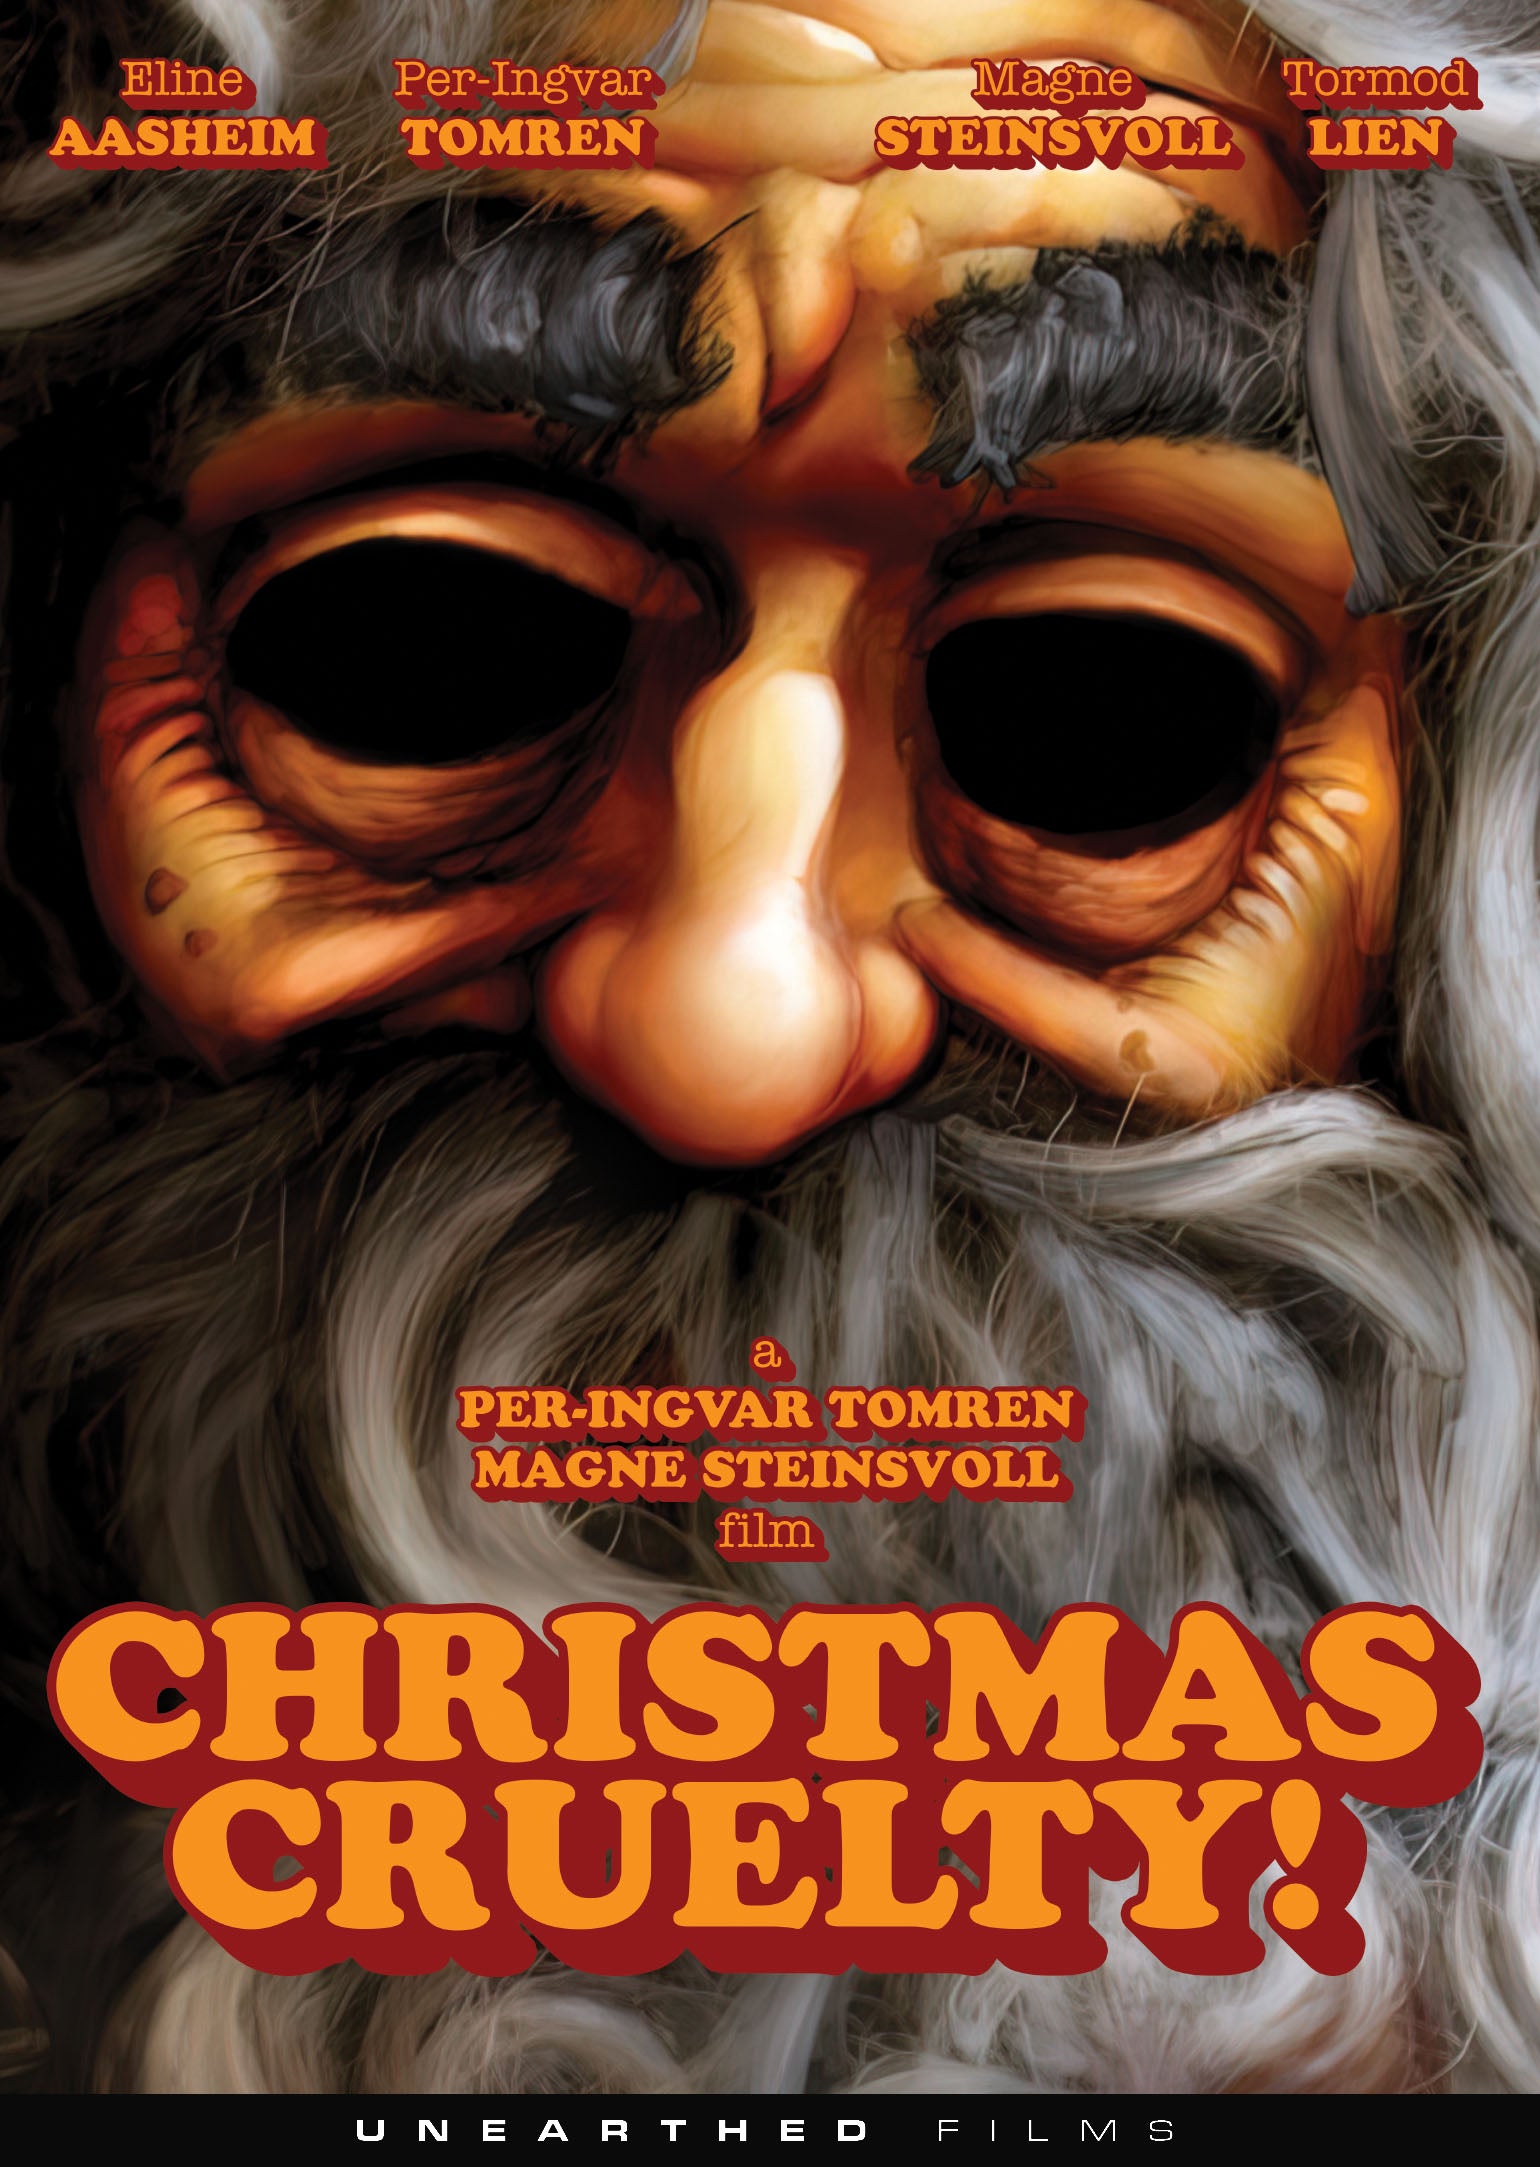 CHRISTMAS CRUELTY DVD